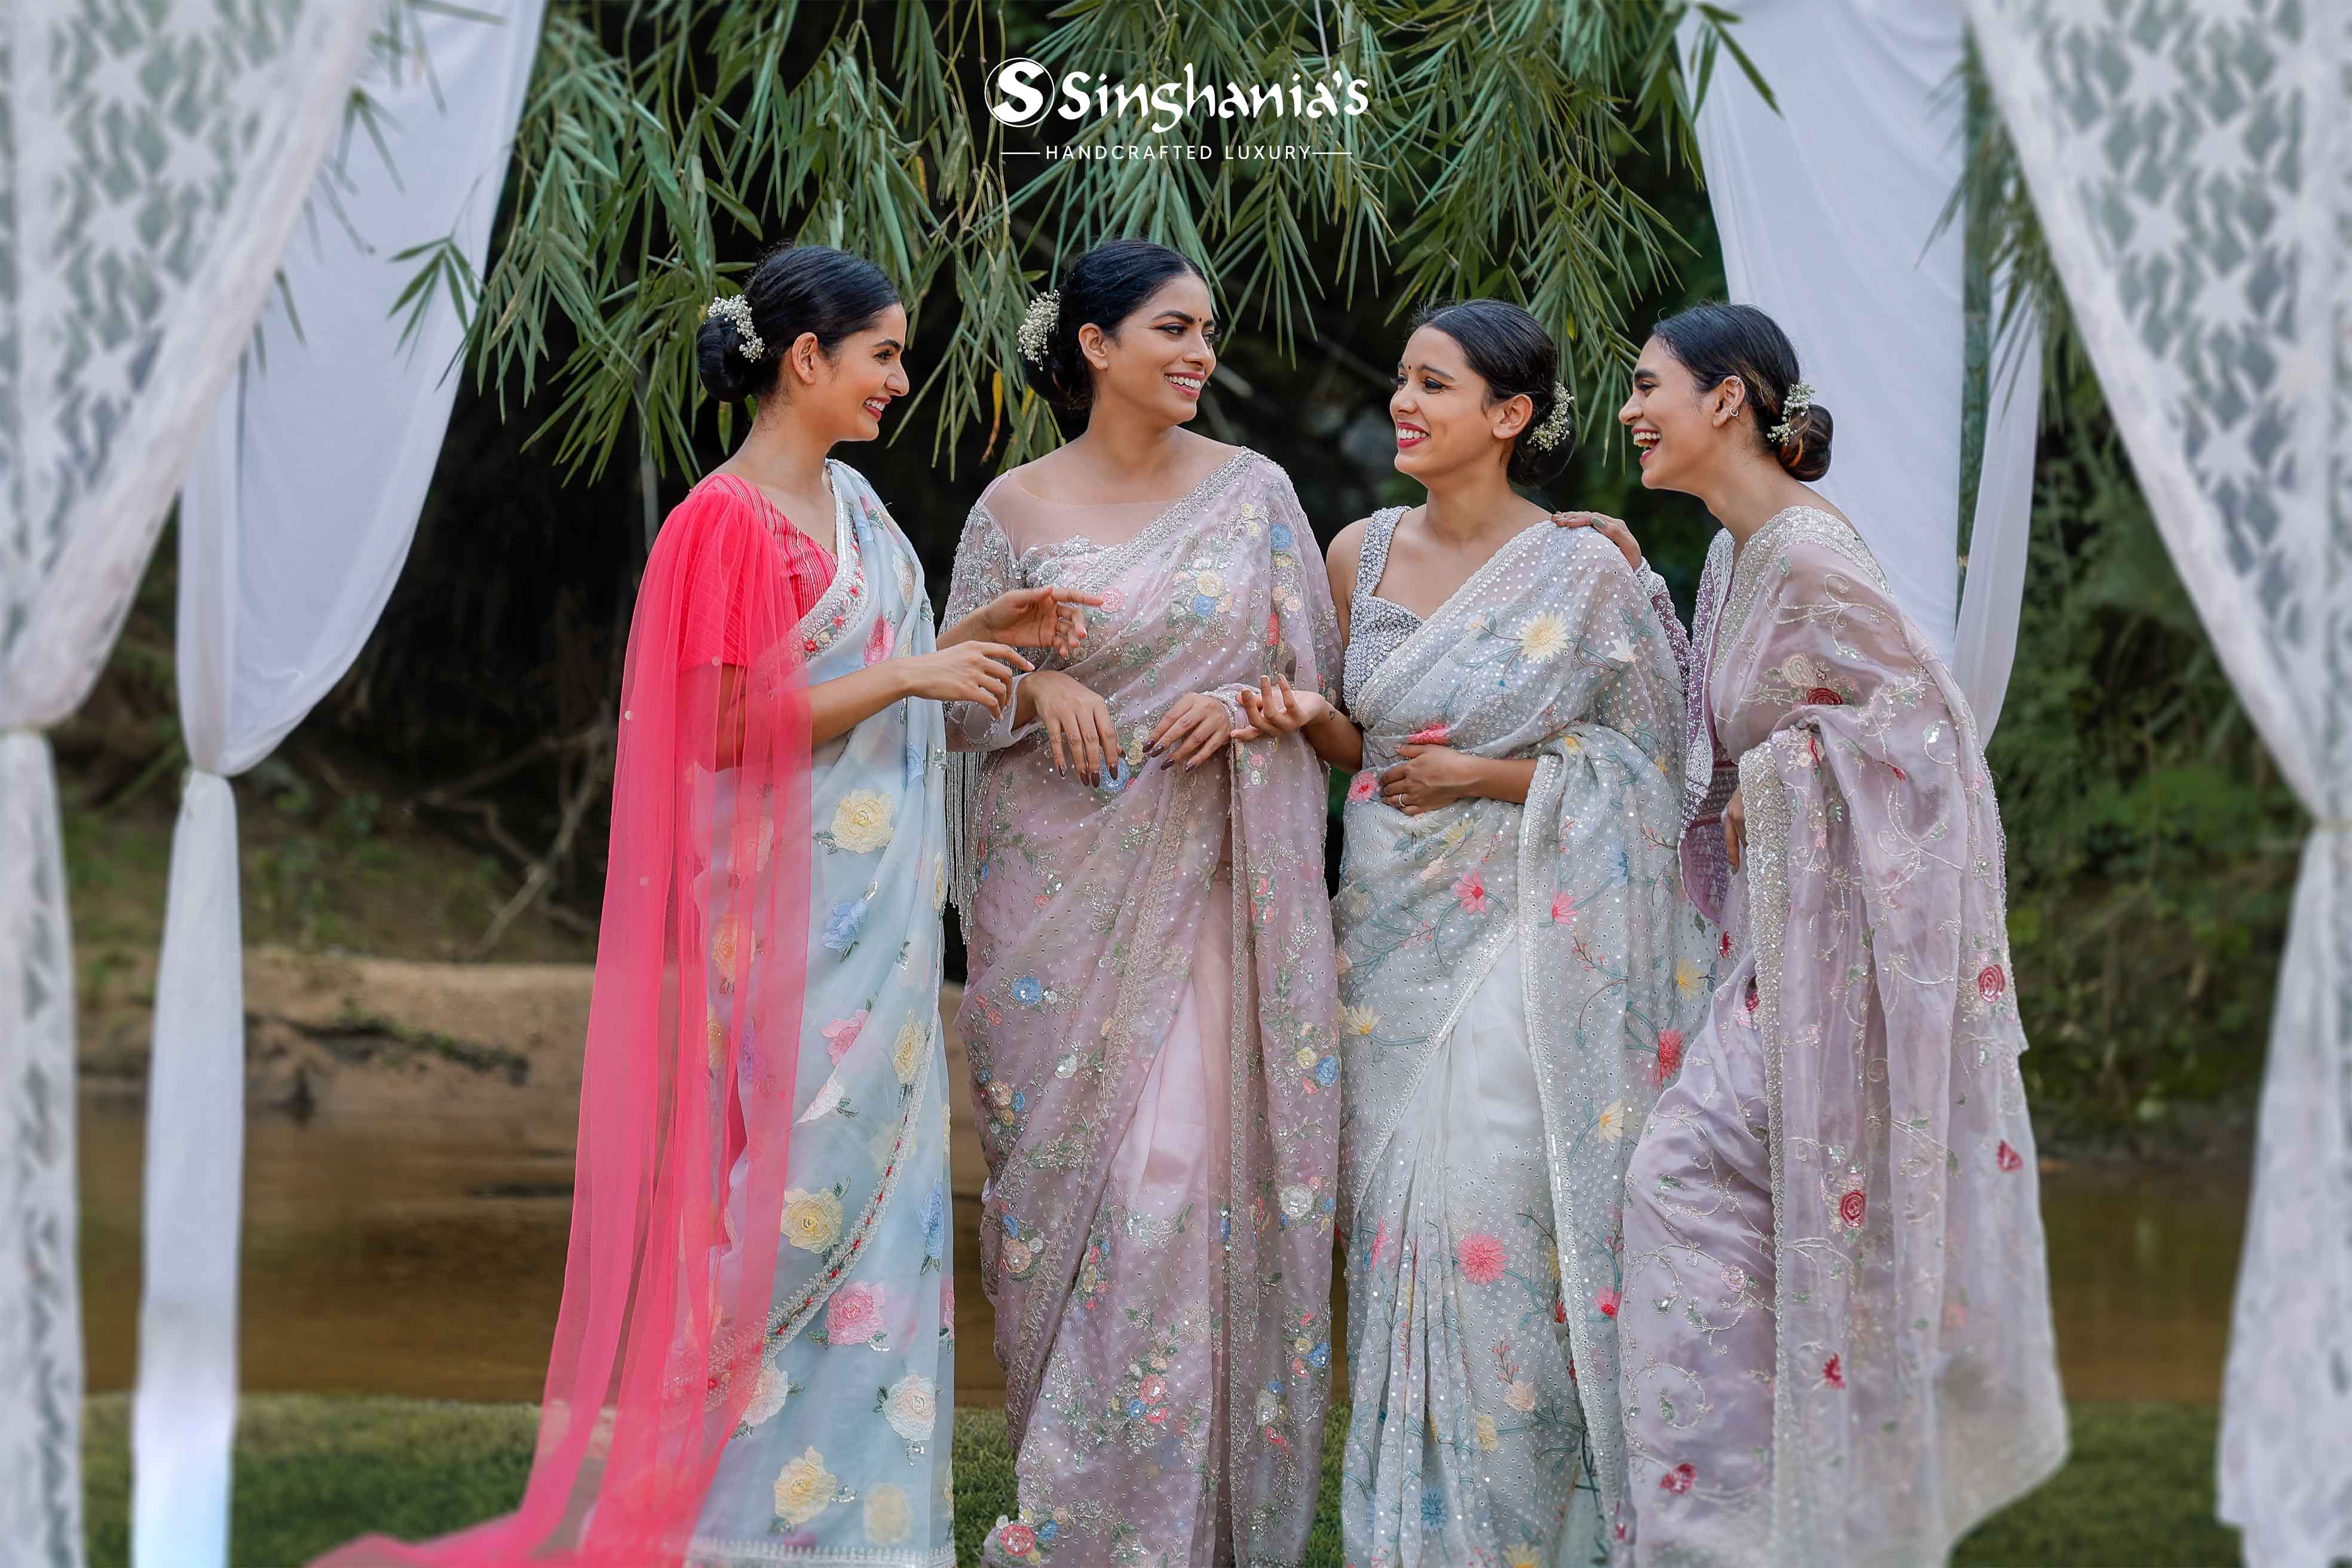 How to wear saree to look Slim - Updated 3 New Saree Draping Ways 